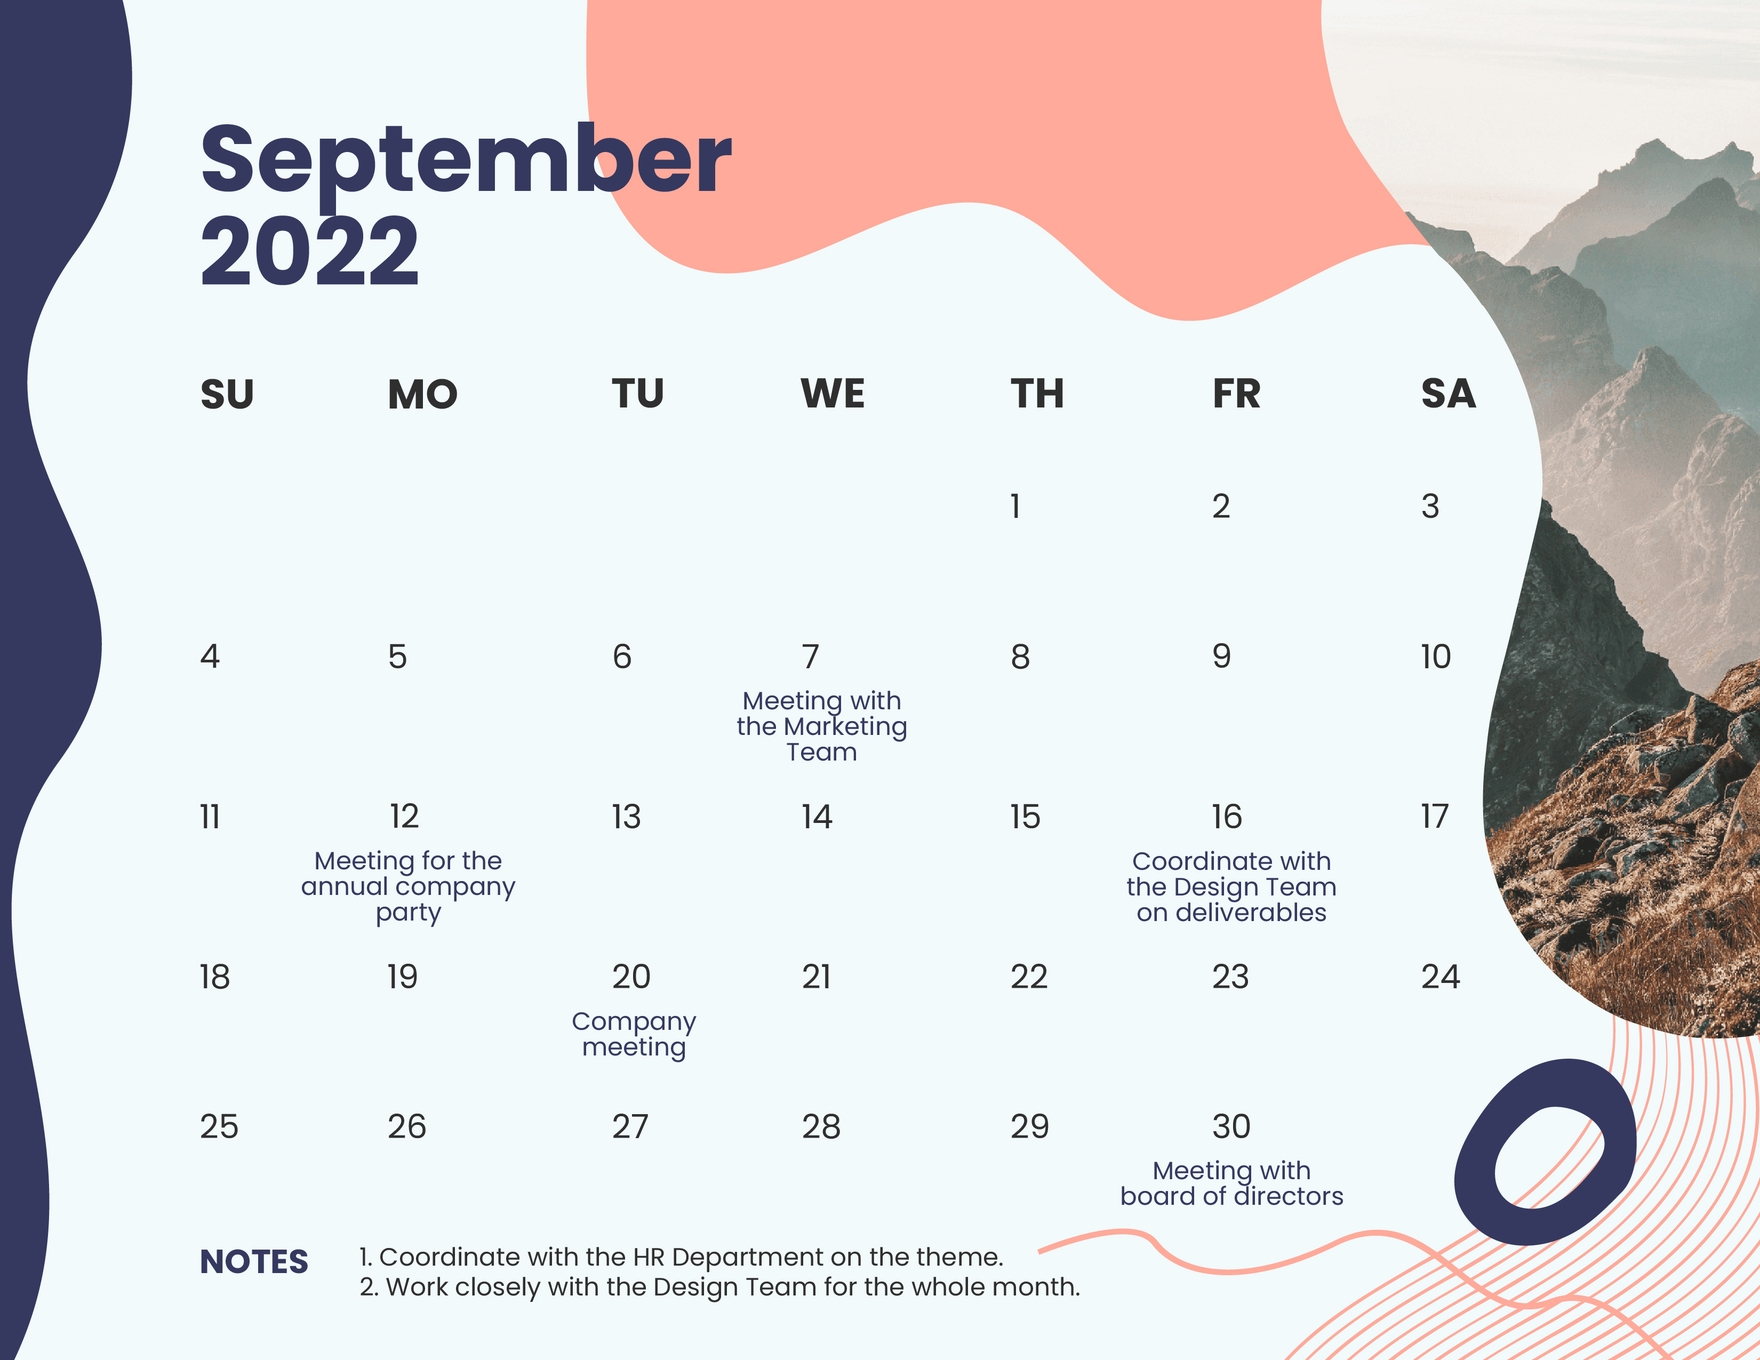 Free September 2022 Photo Calendar Template in Word, Illustrator, PSD